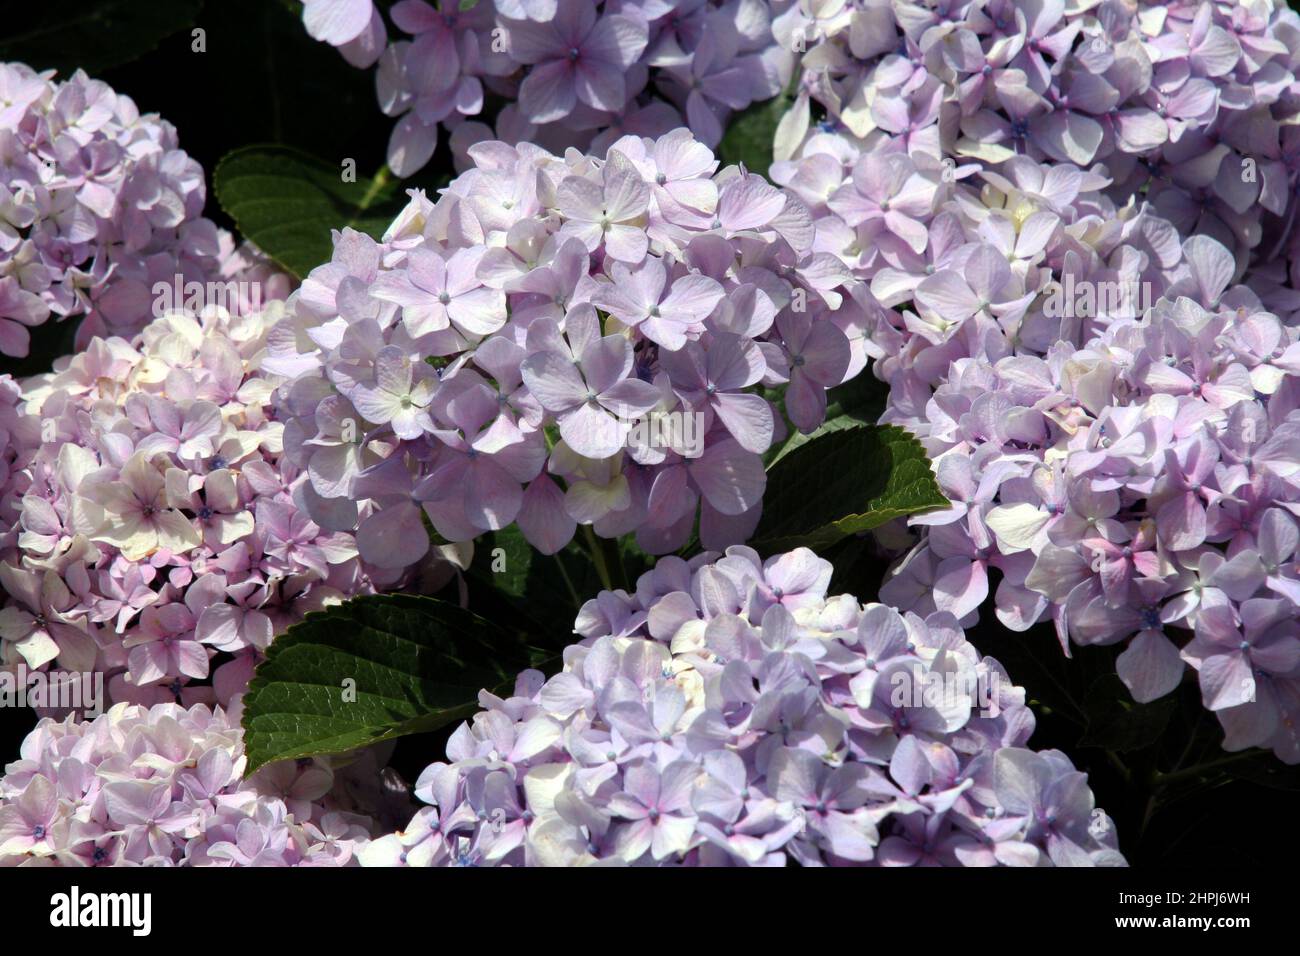 PALE MAUVE HYDRANGEA FLOWERS Stock Photo